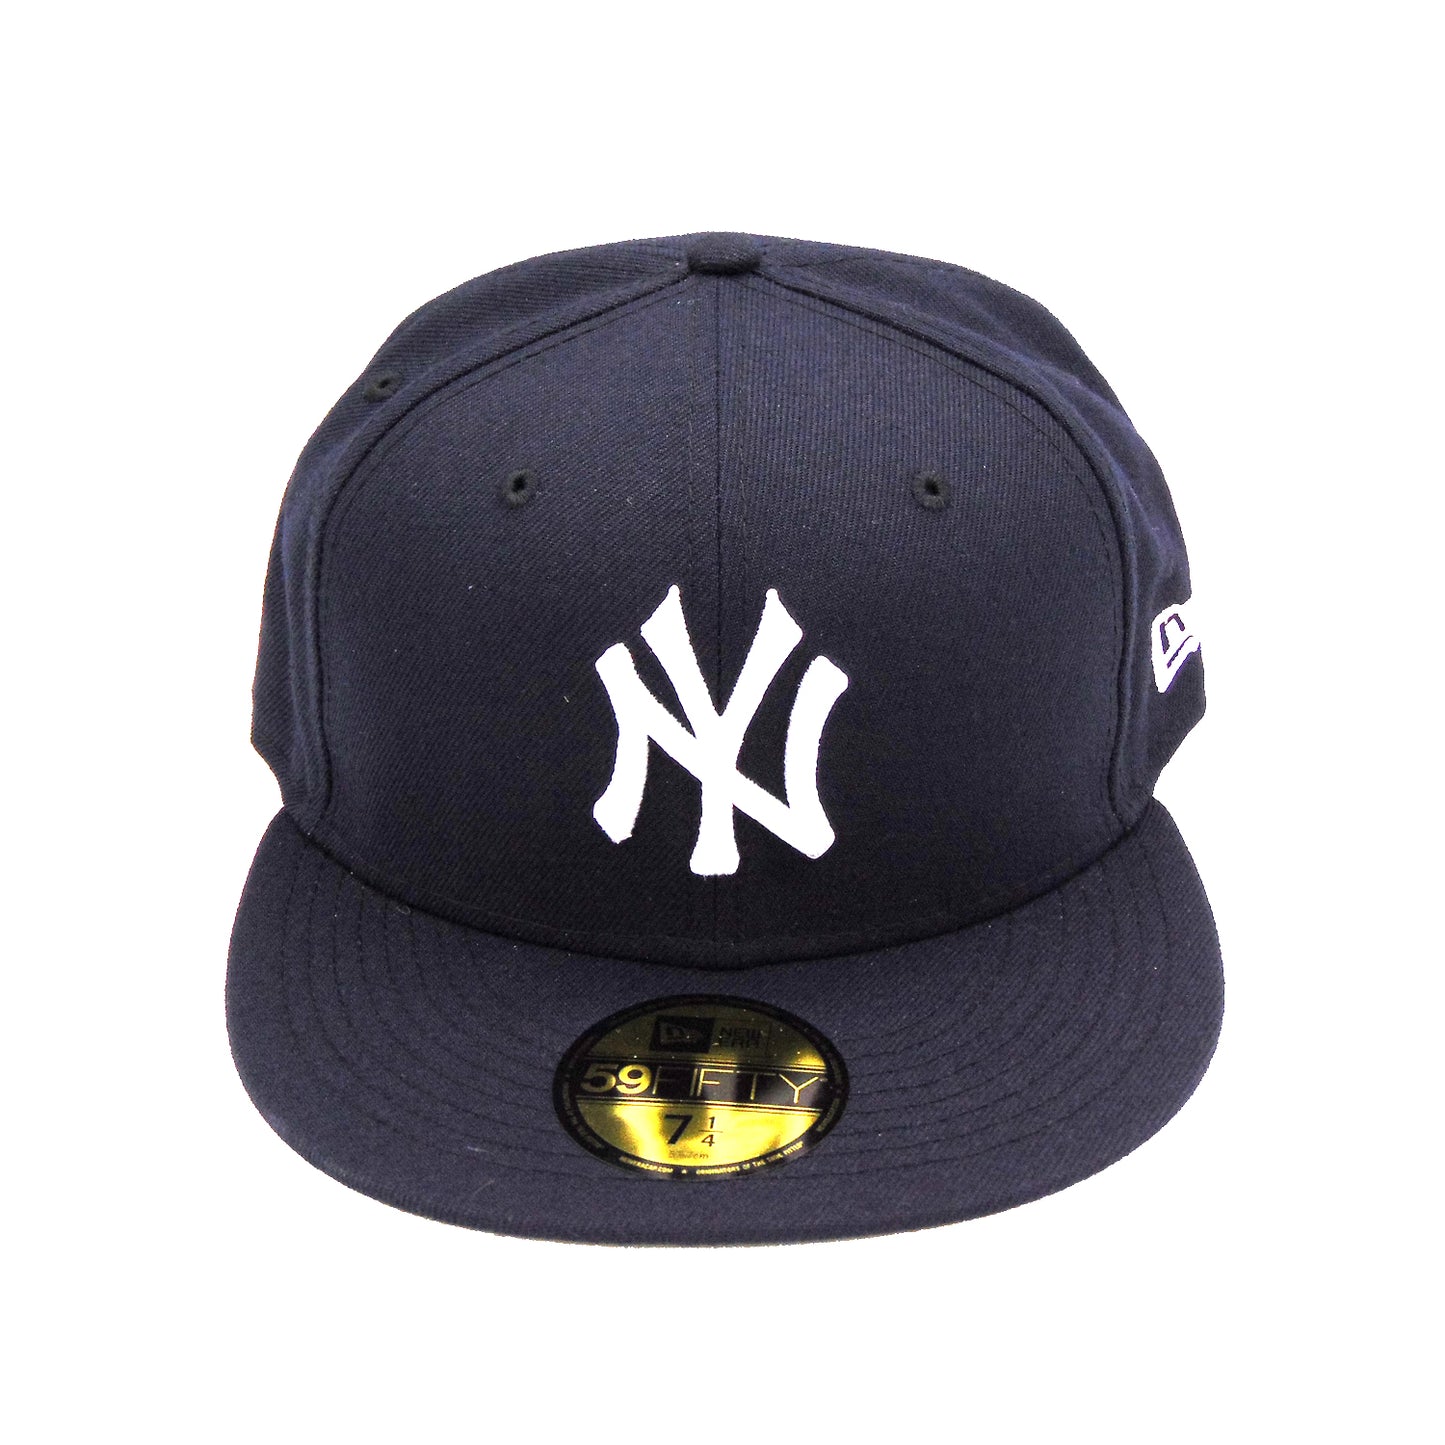 New York Yankees Authentic New Era 59FIFTY Cap Navy